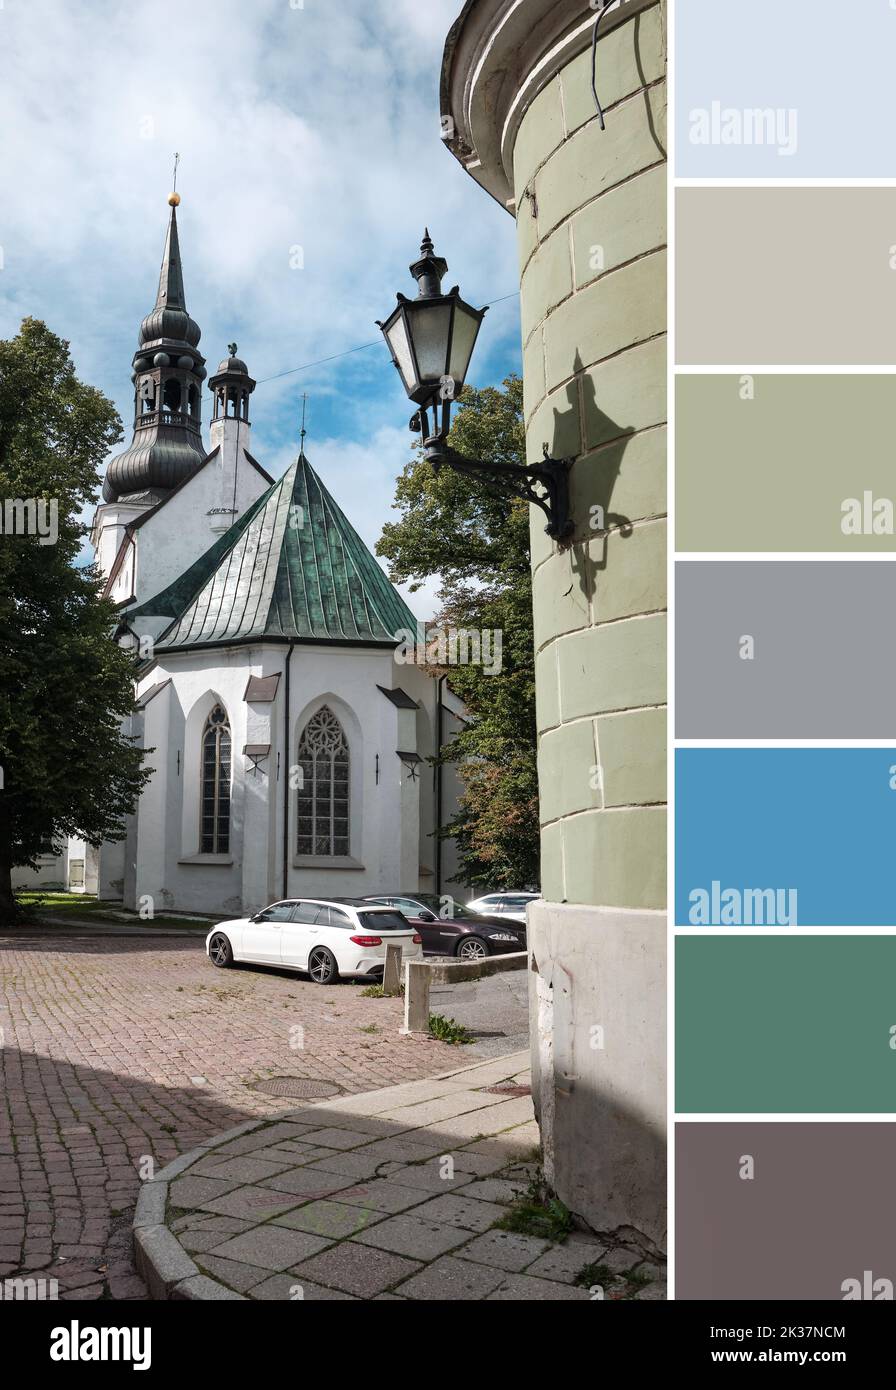 Color matching palette from image of Peapiiskopi Kirik Church in Tallinn, Estonia. Stock Photo